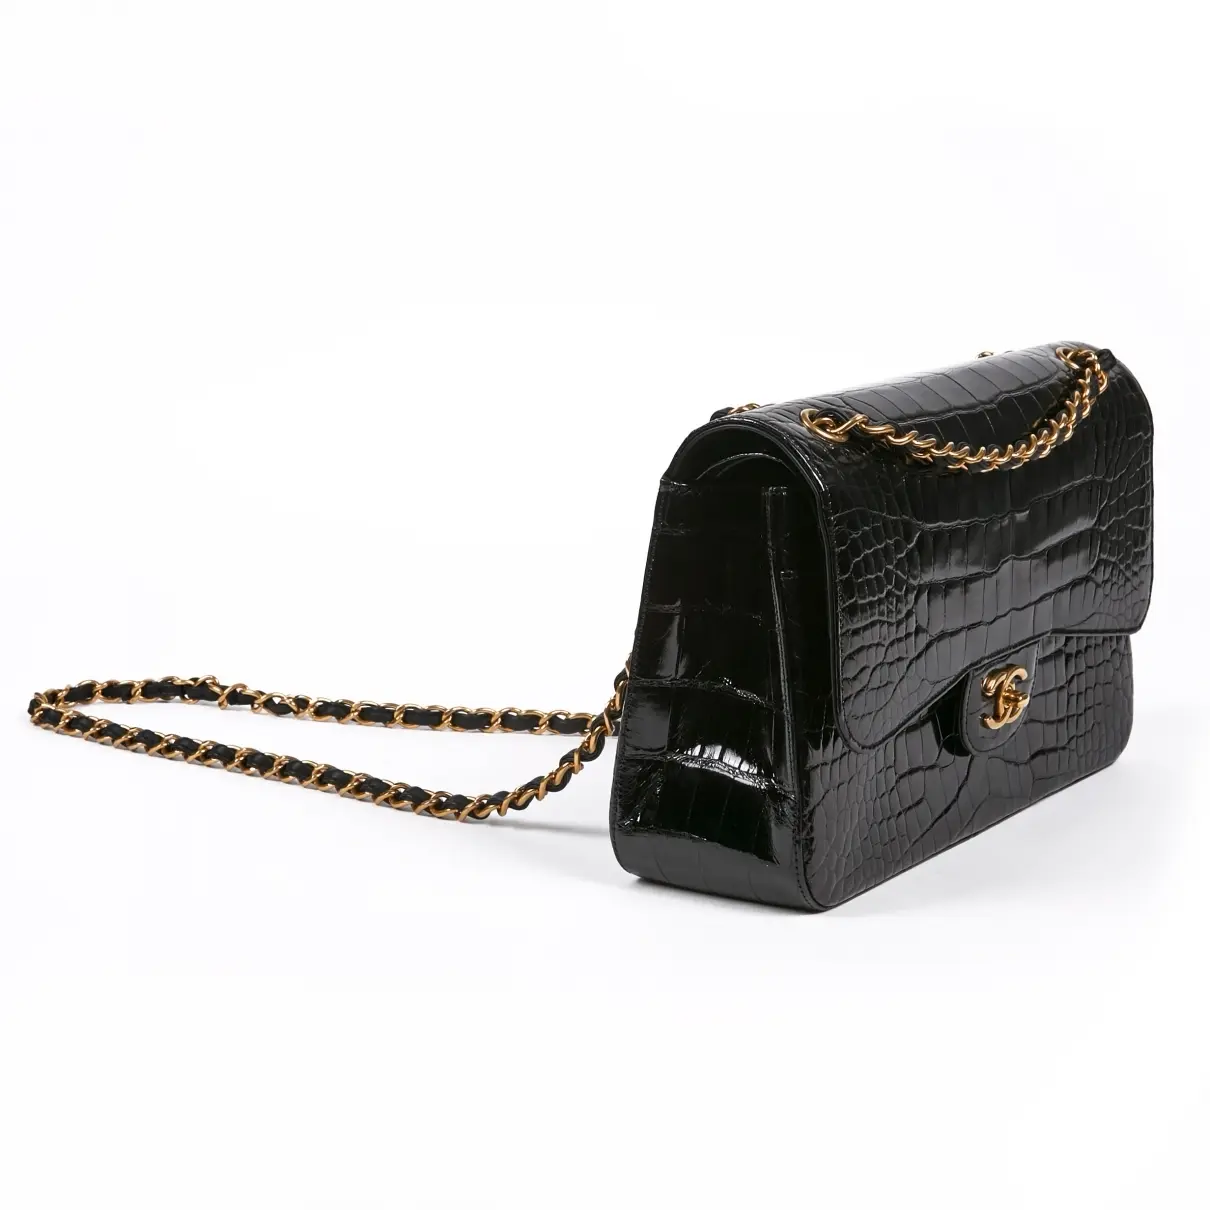 Buy Chanel Exotic leathers handbag online